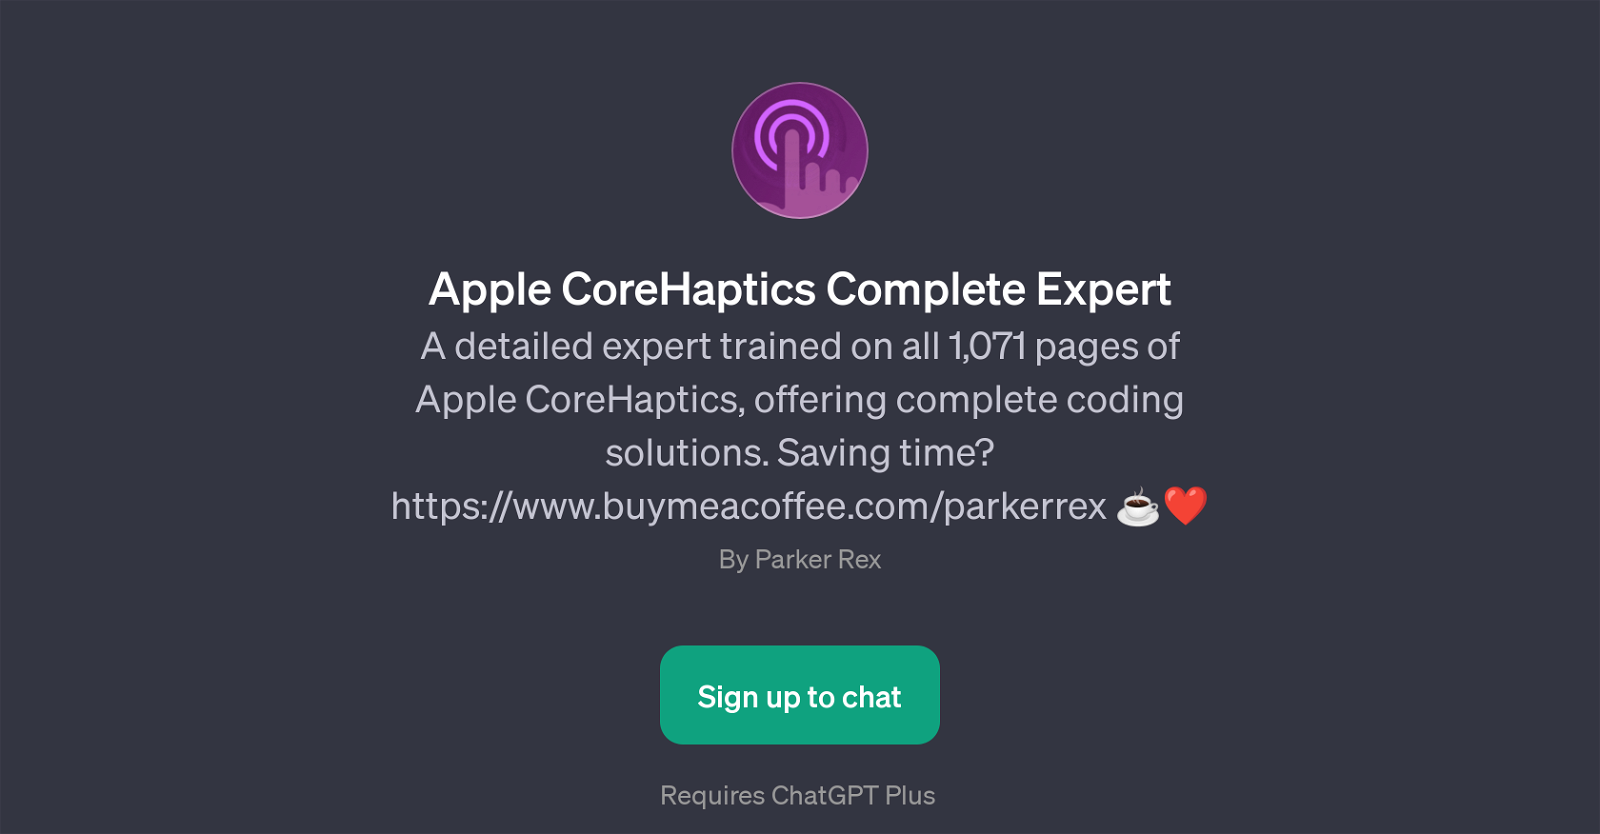 Apple CoreHaptics Complete Expert website